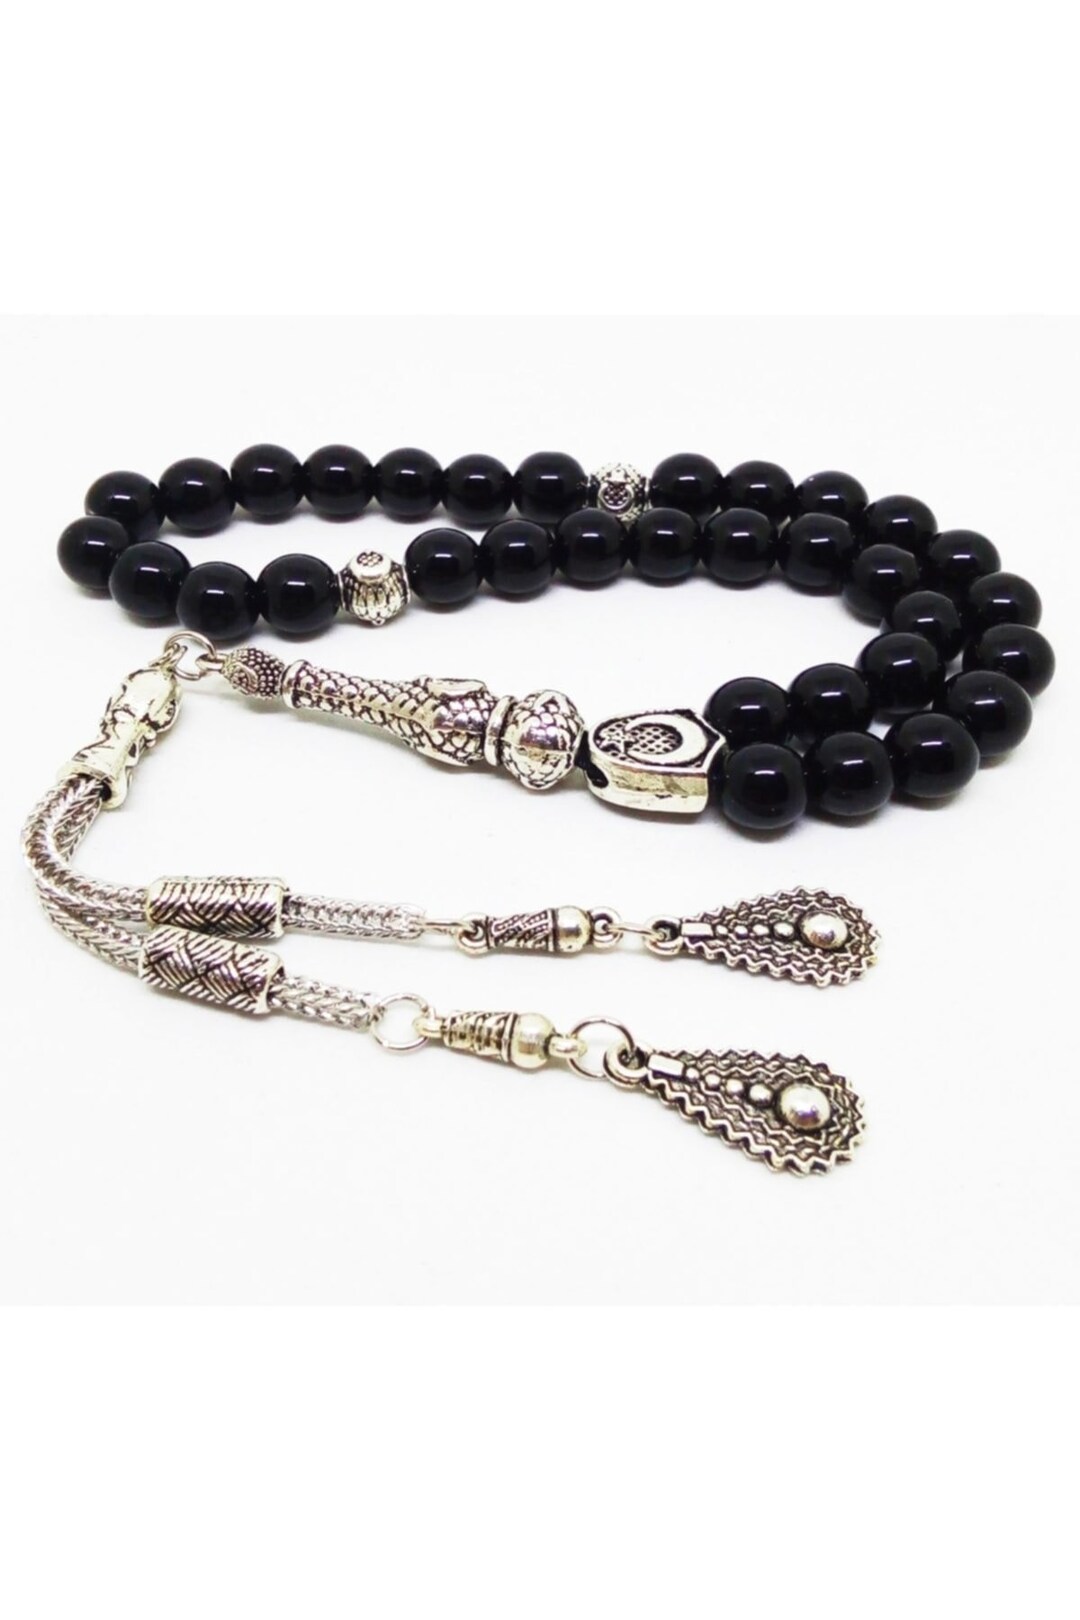 Black Onyx Gemstone Prayer Beads Sufi Tasbih With Drop Tassels - Etsy